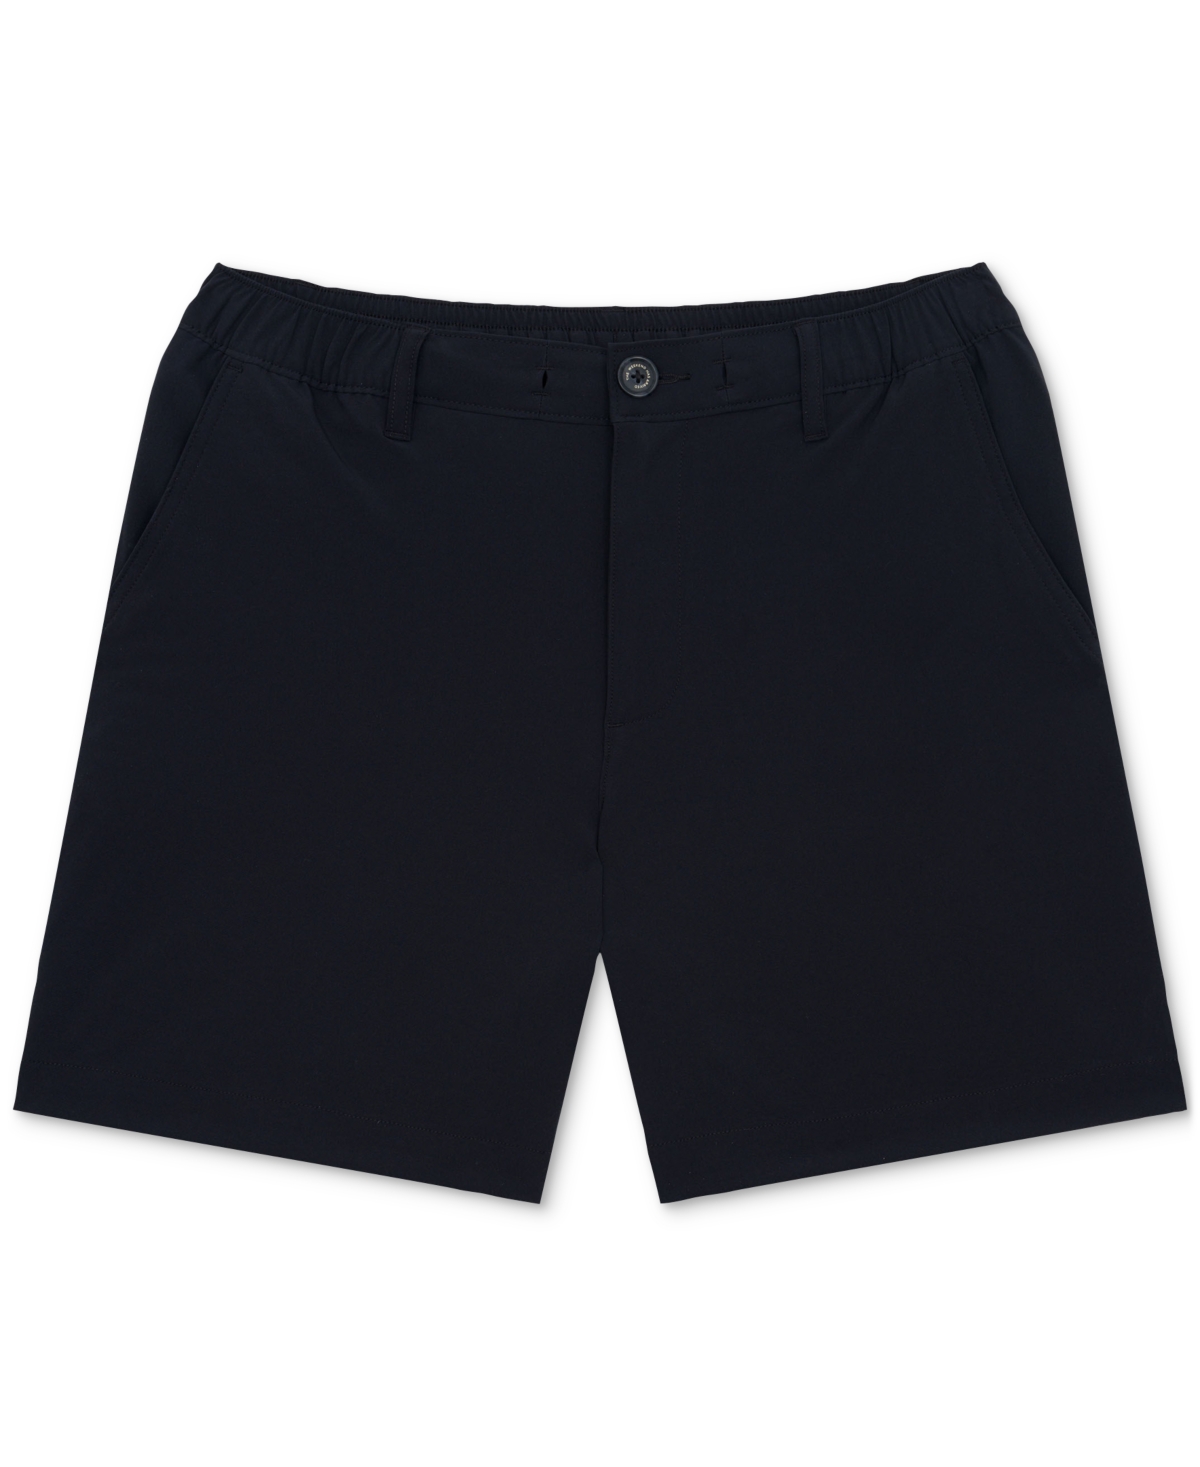 Men's The Everywear 6" Shorts - Black - So